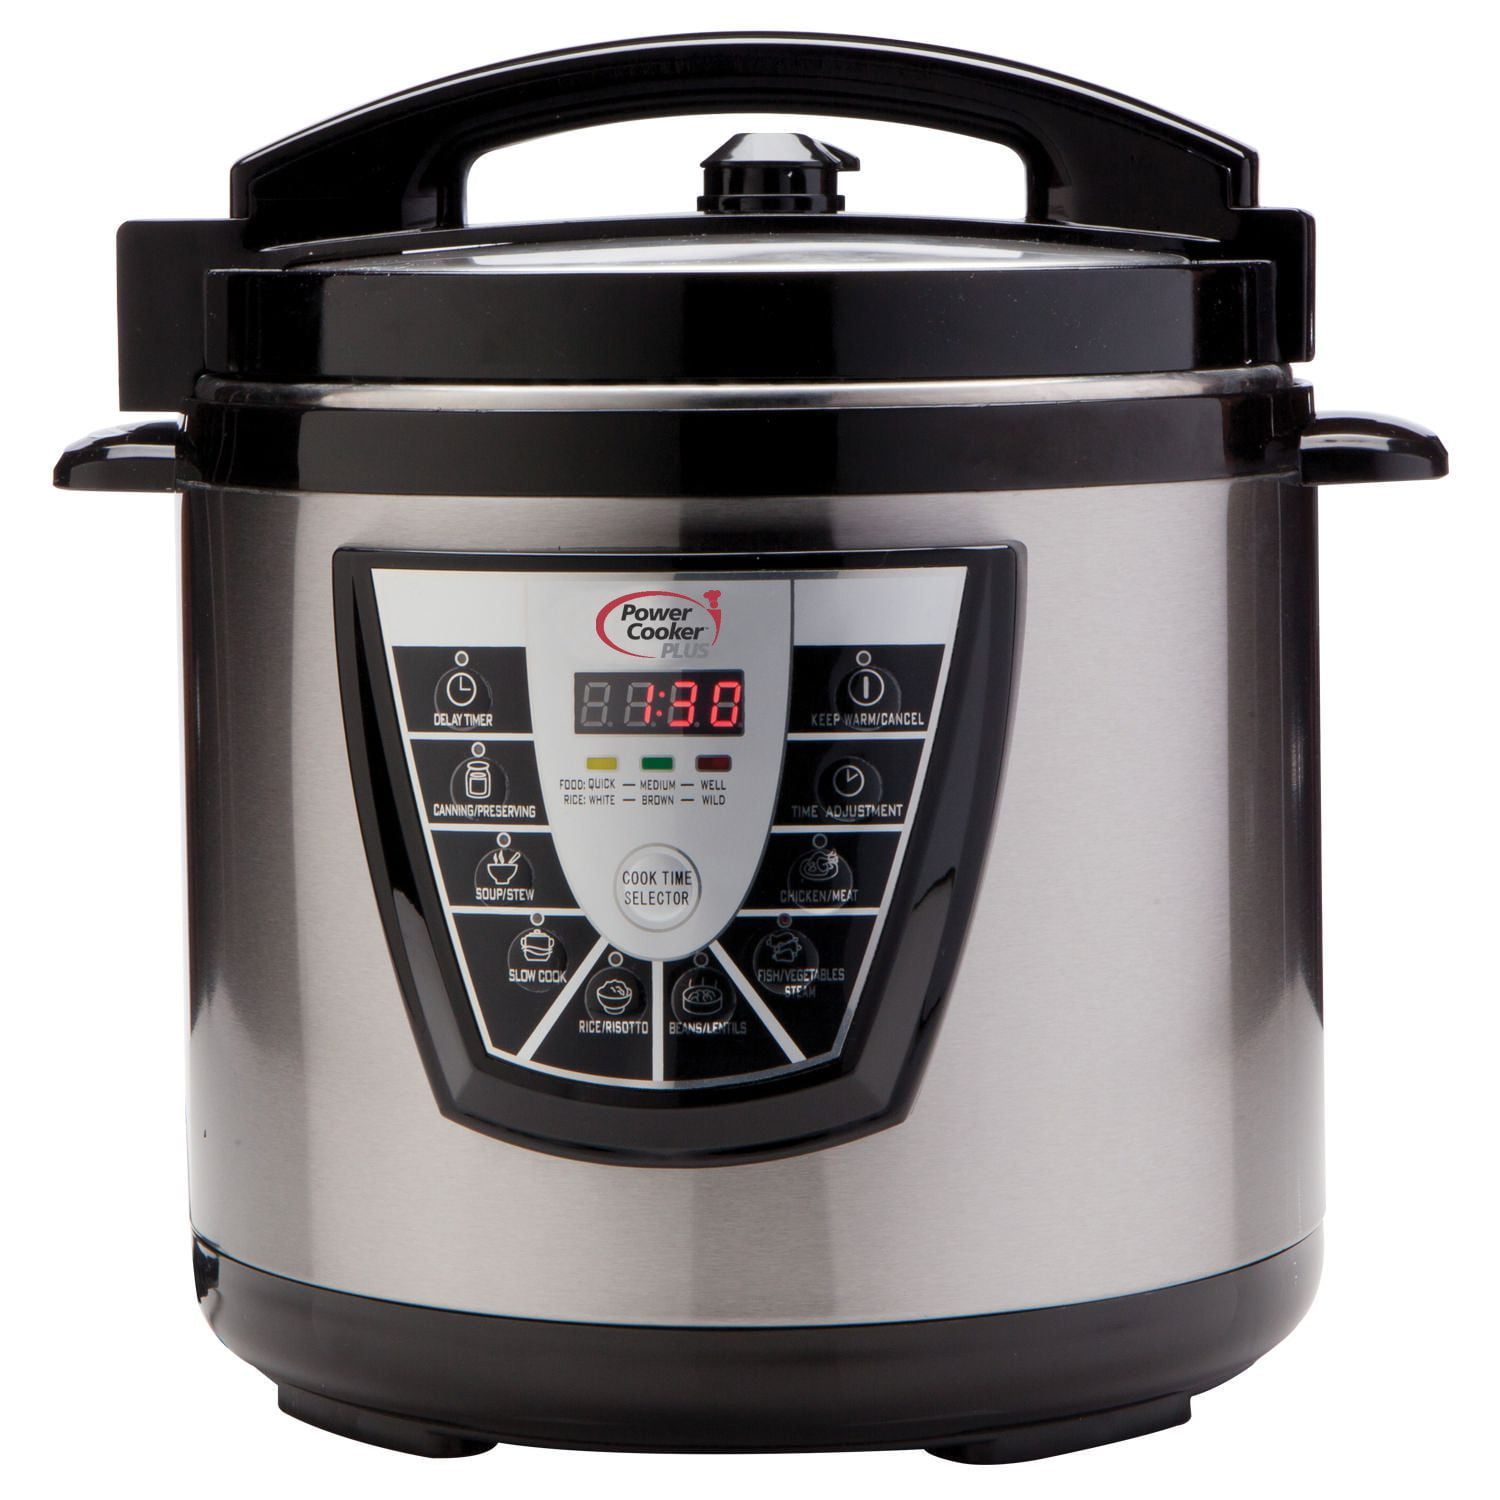 Cooks Essentials Pressure Cooker 8-Quart User Manual, PDF, Pressure  Cooking